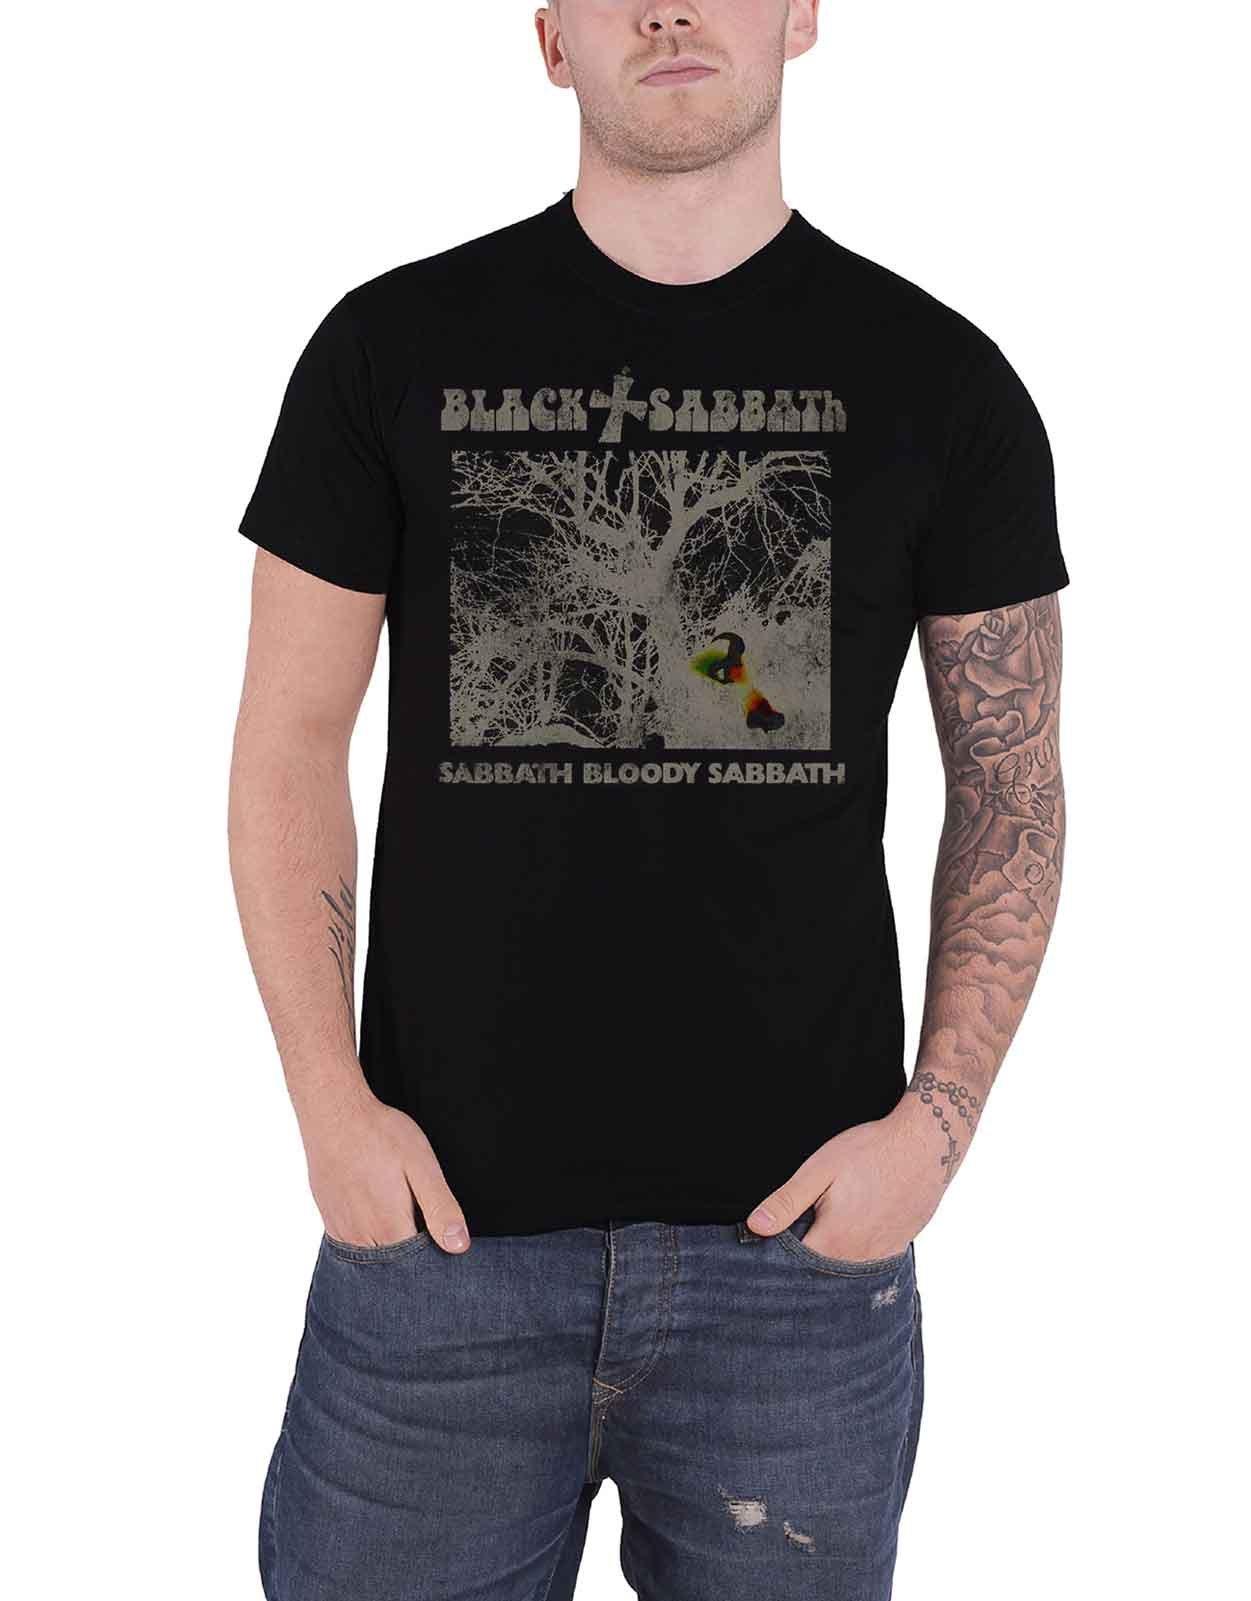 Винтажная футболка Sabbath Bloody Sabbath Black Sabbath, черный lp диск lp black sabbath black sabbath purple